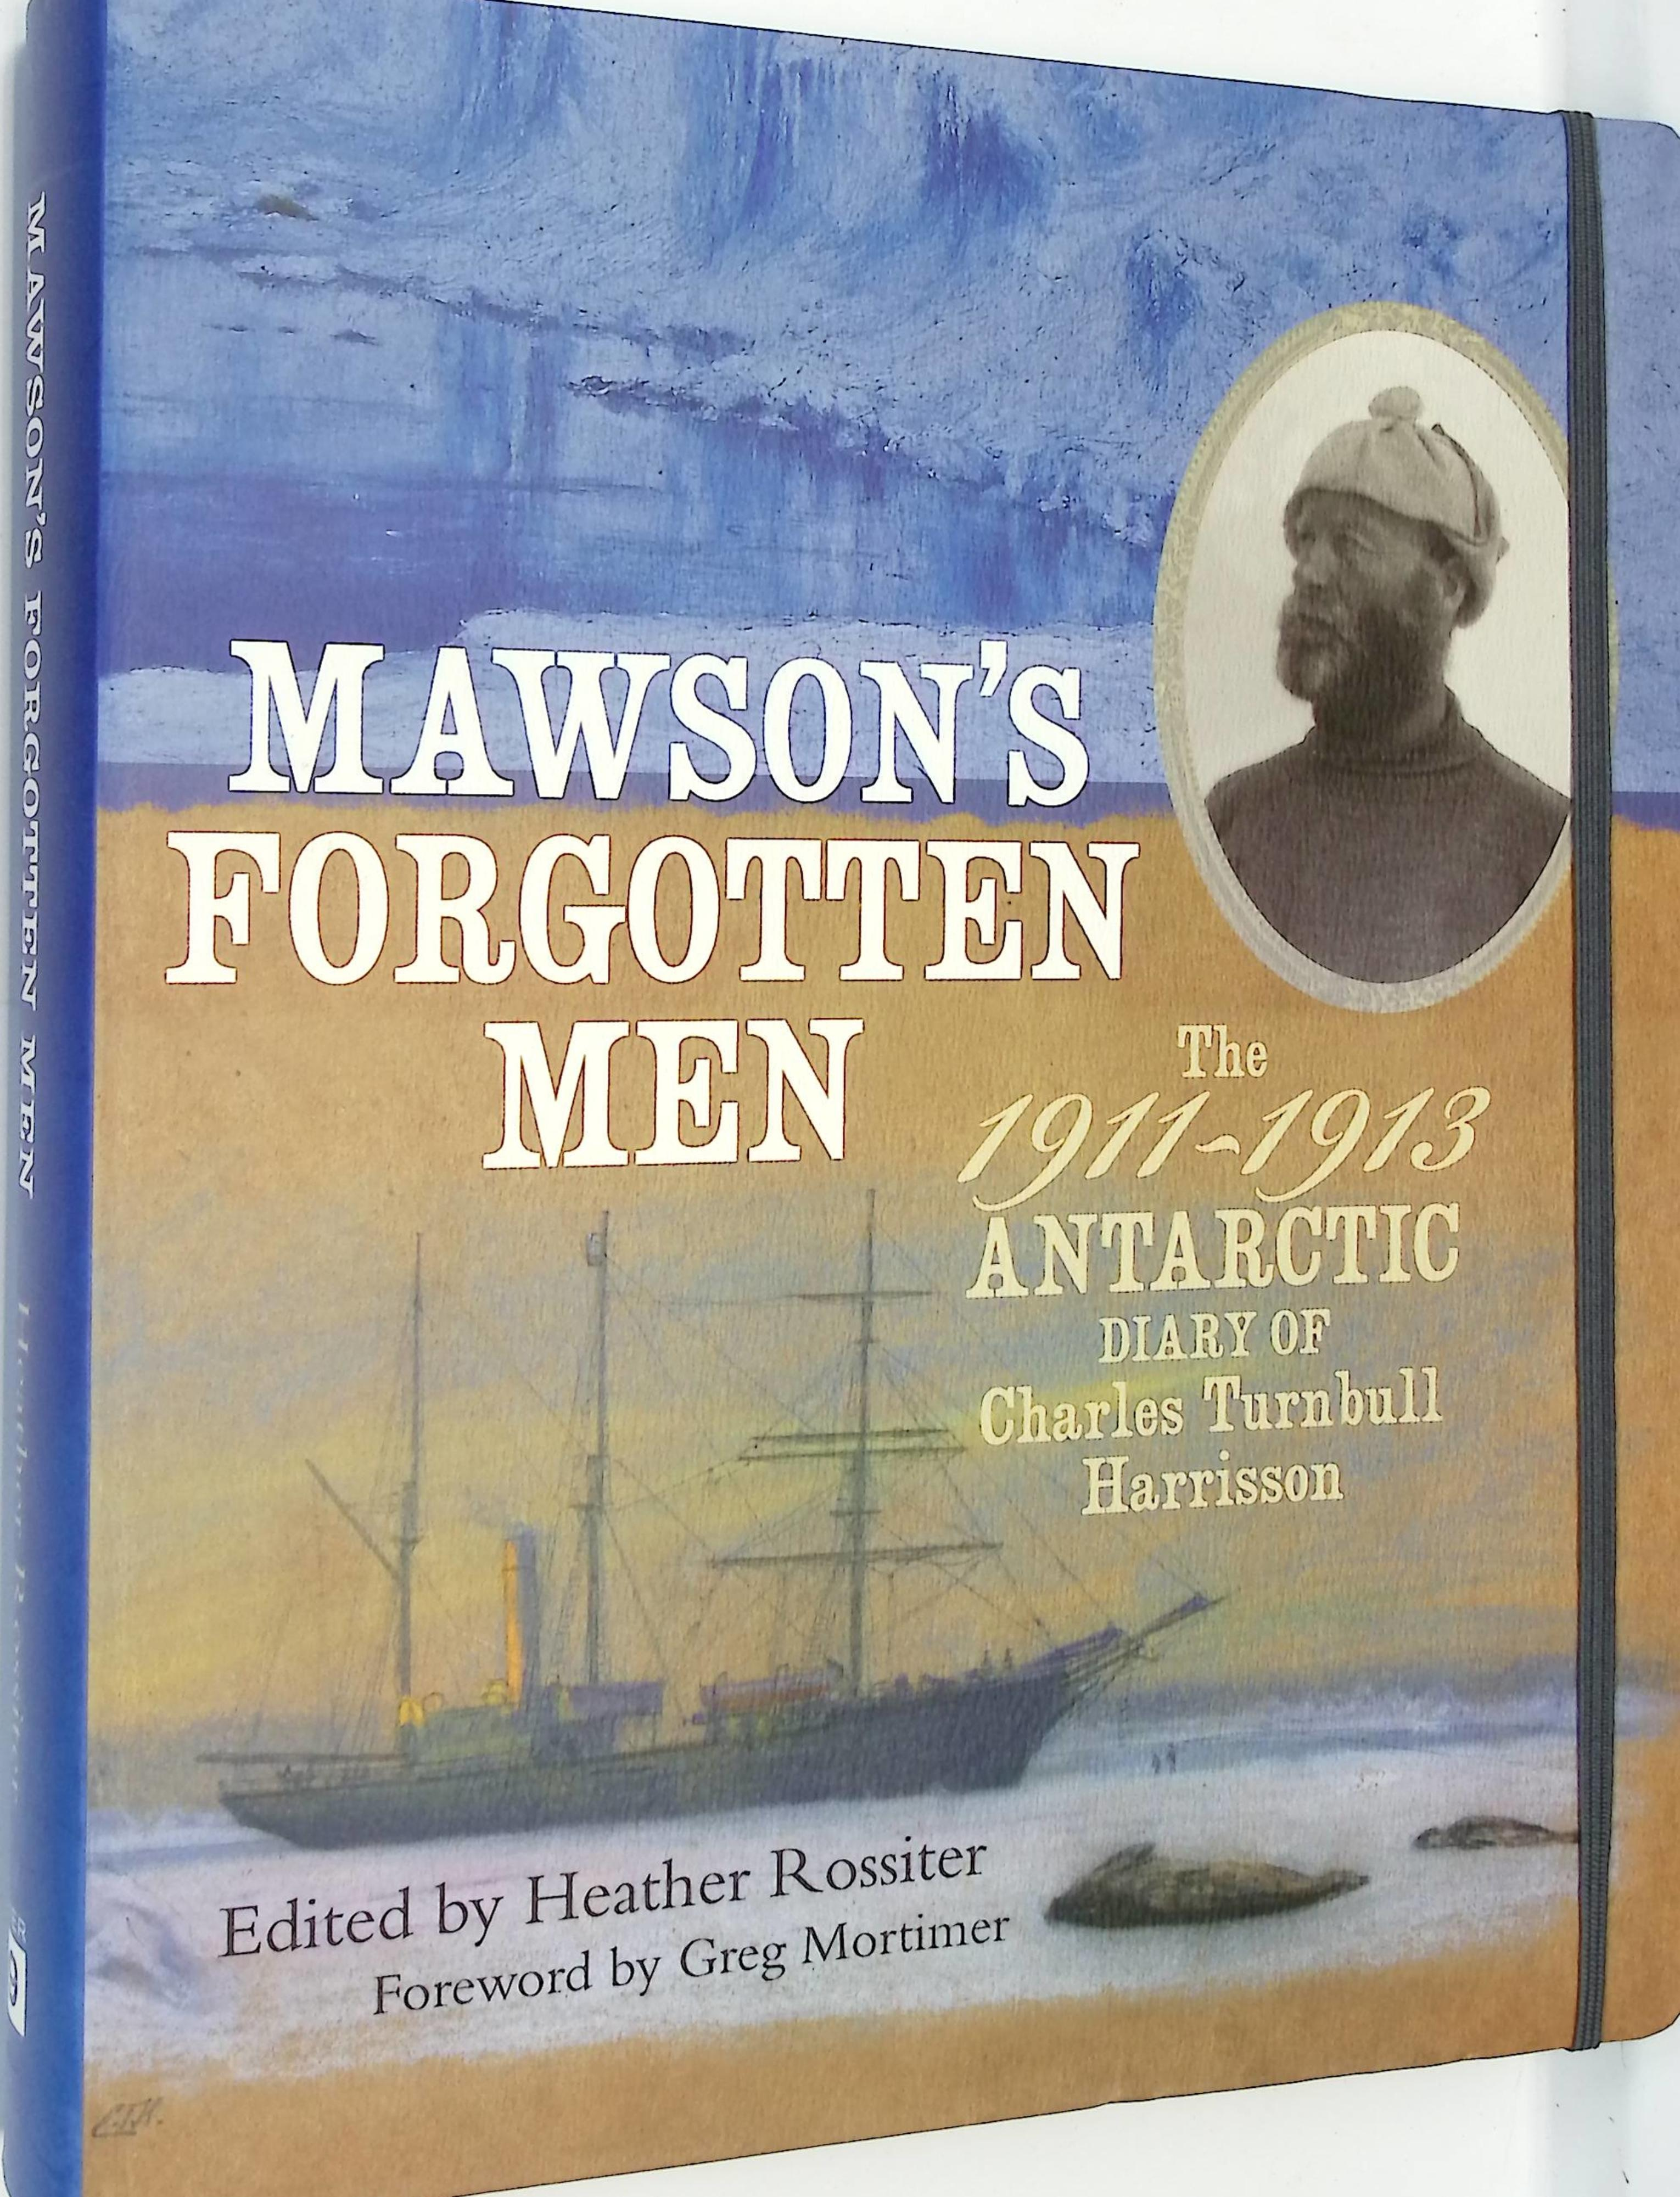 Mawson's Forgotten Men. The 1911-1913 Antarctic Diary of Charles Turnbull Harrisson